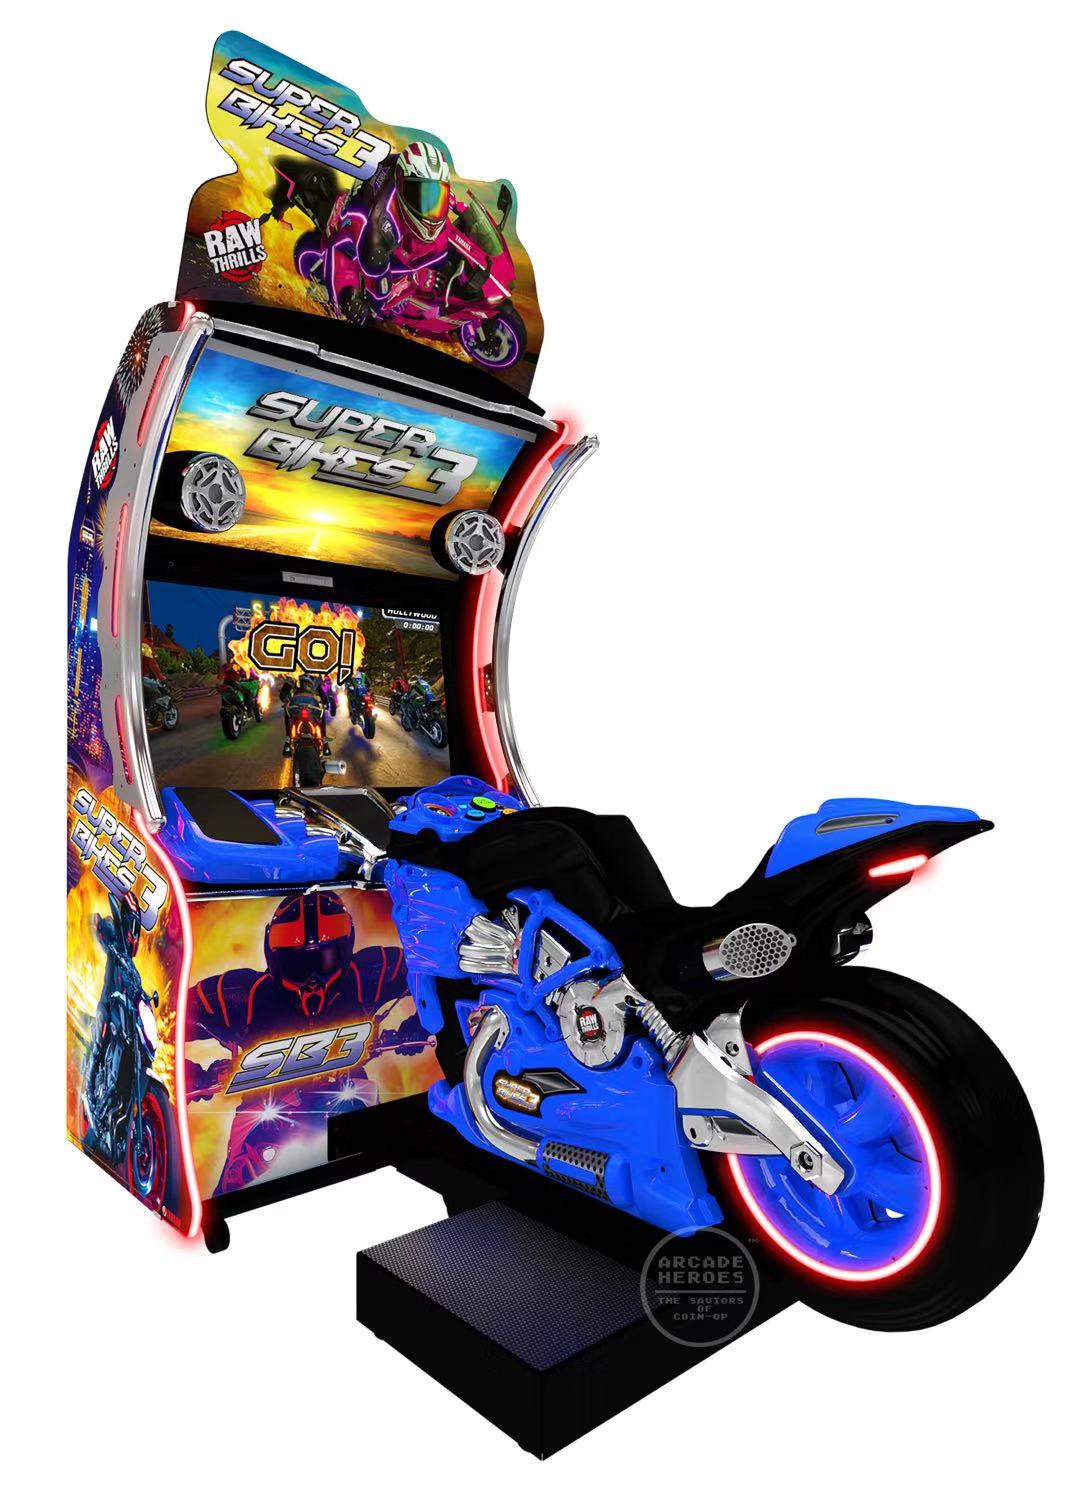 Hotselling super bike 3 simulator motorcycle racing arcade g